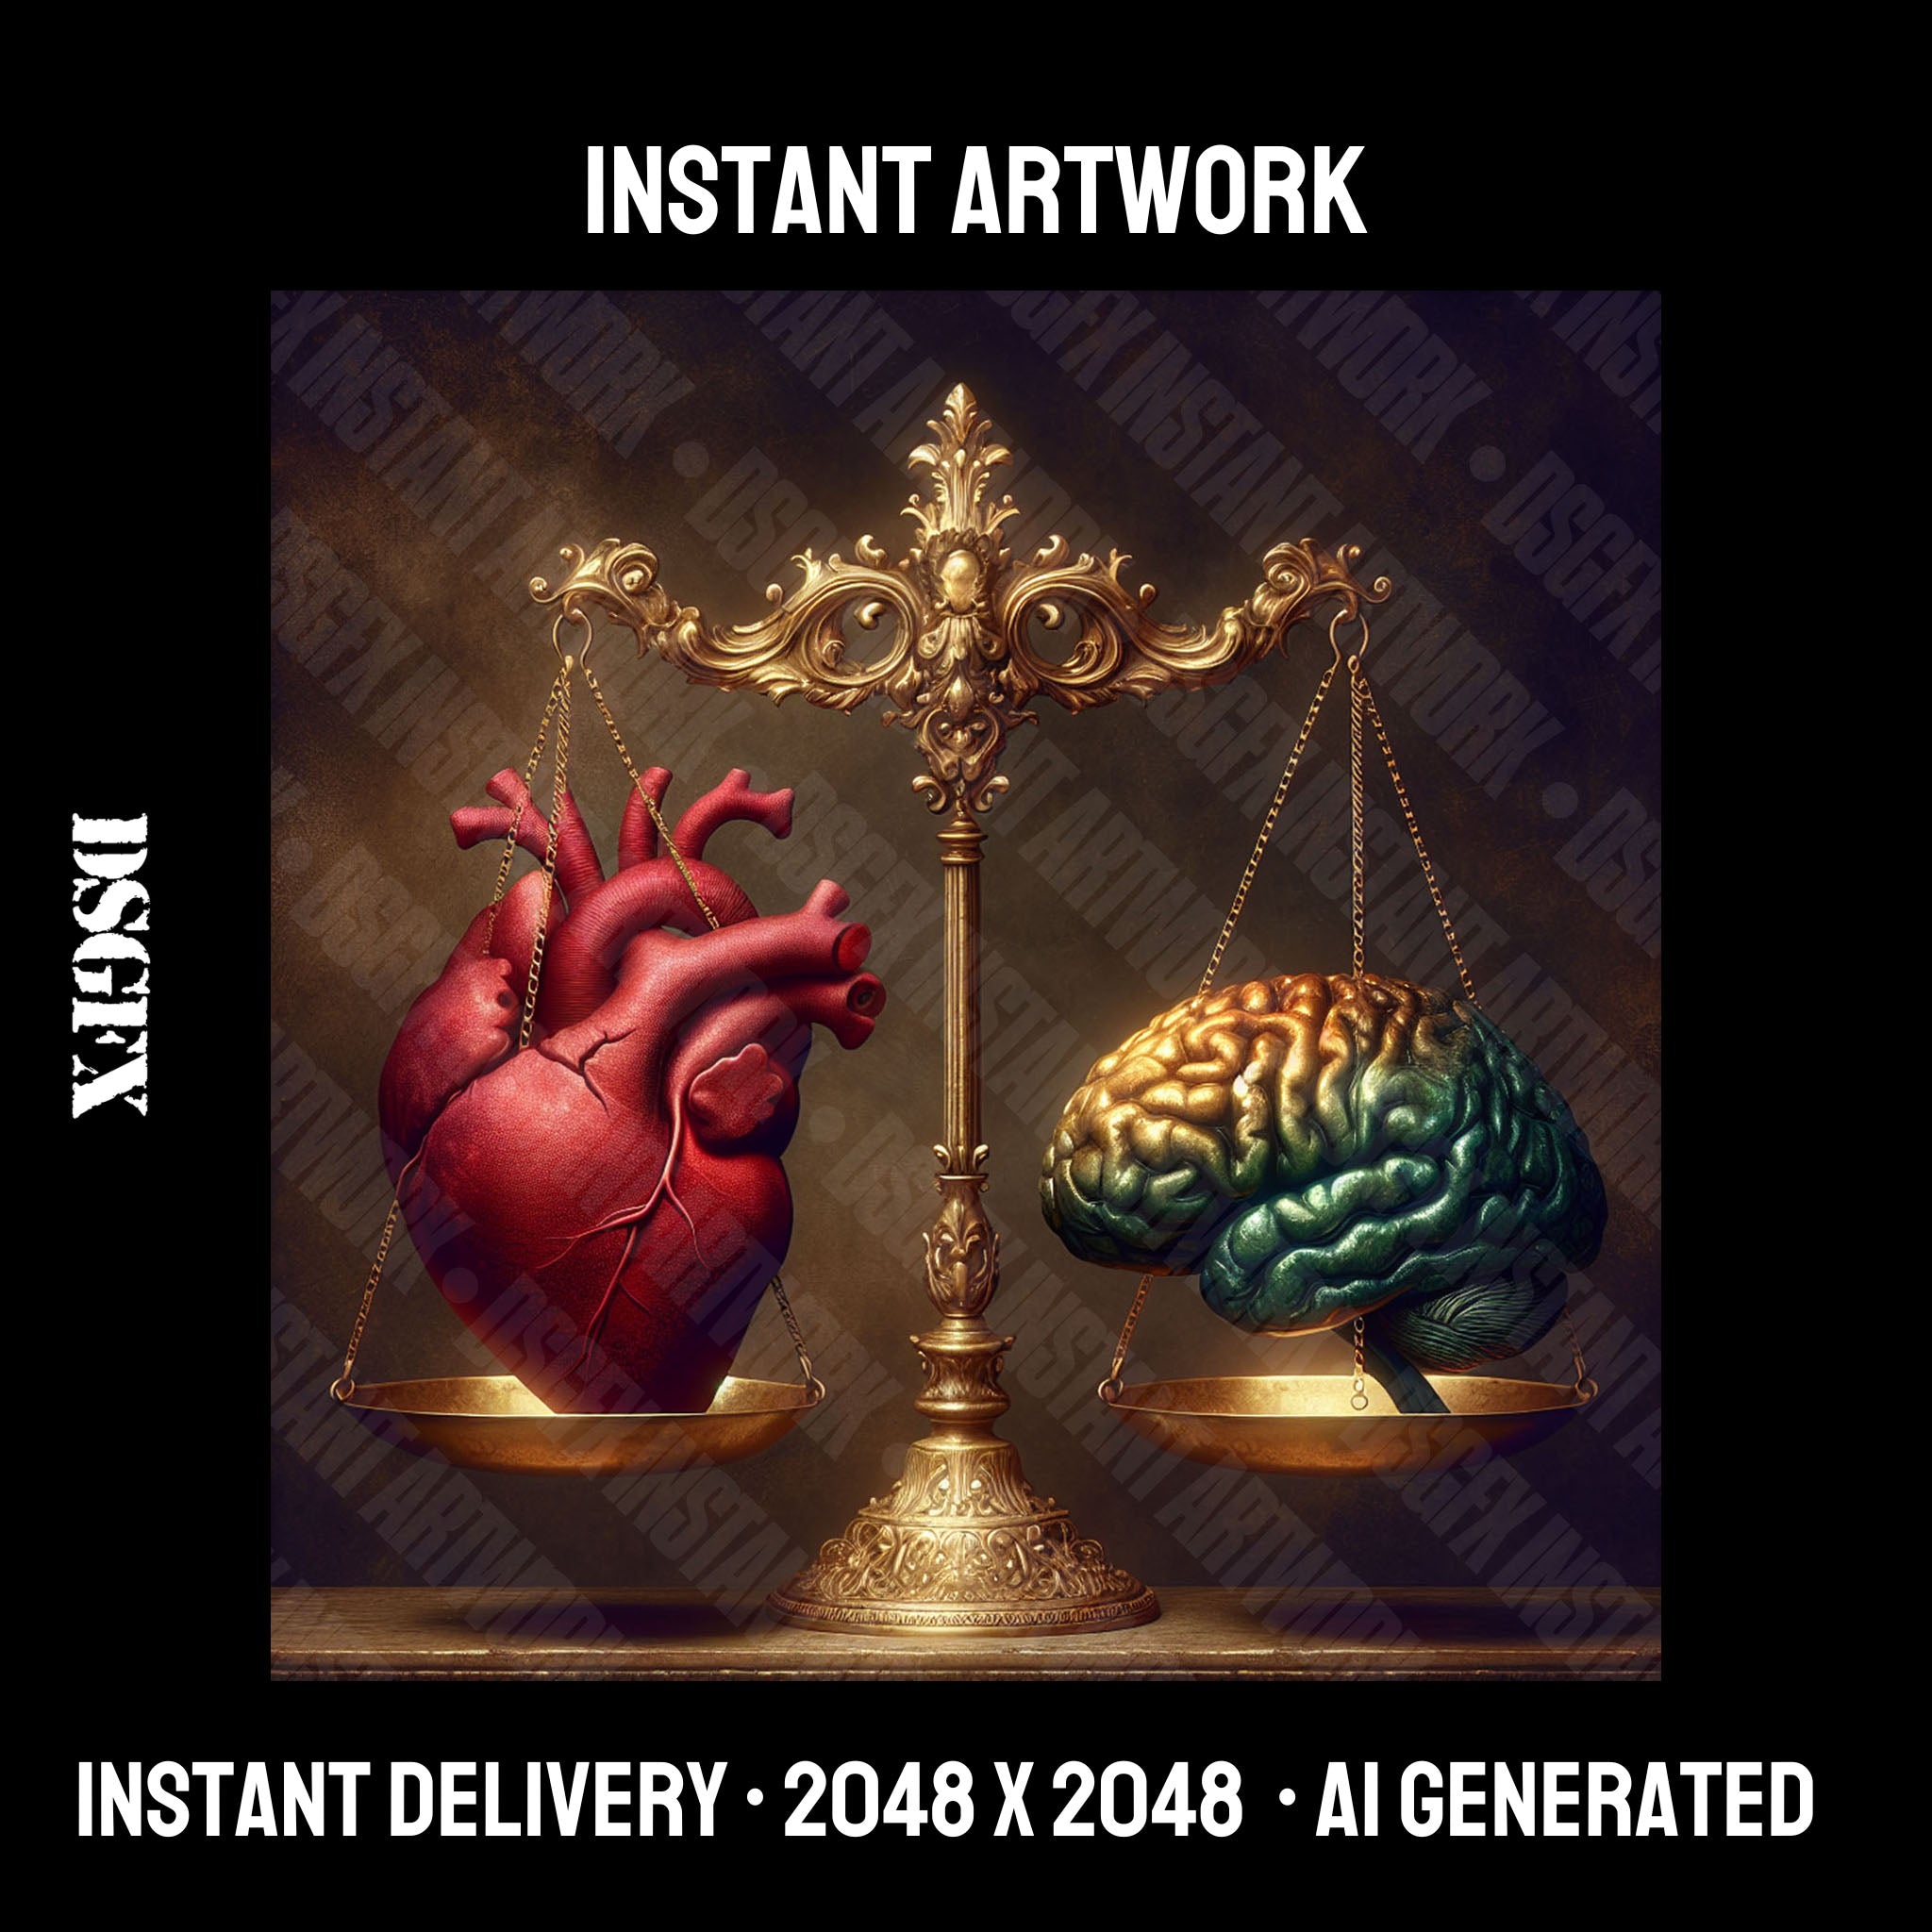 Heart and Brain Balance Artwork